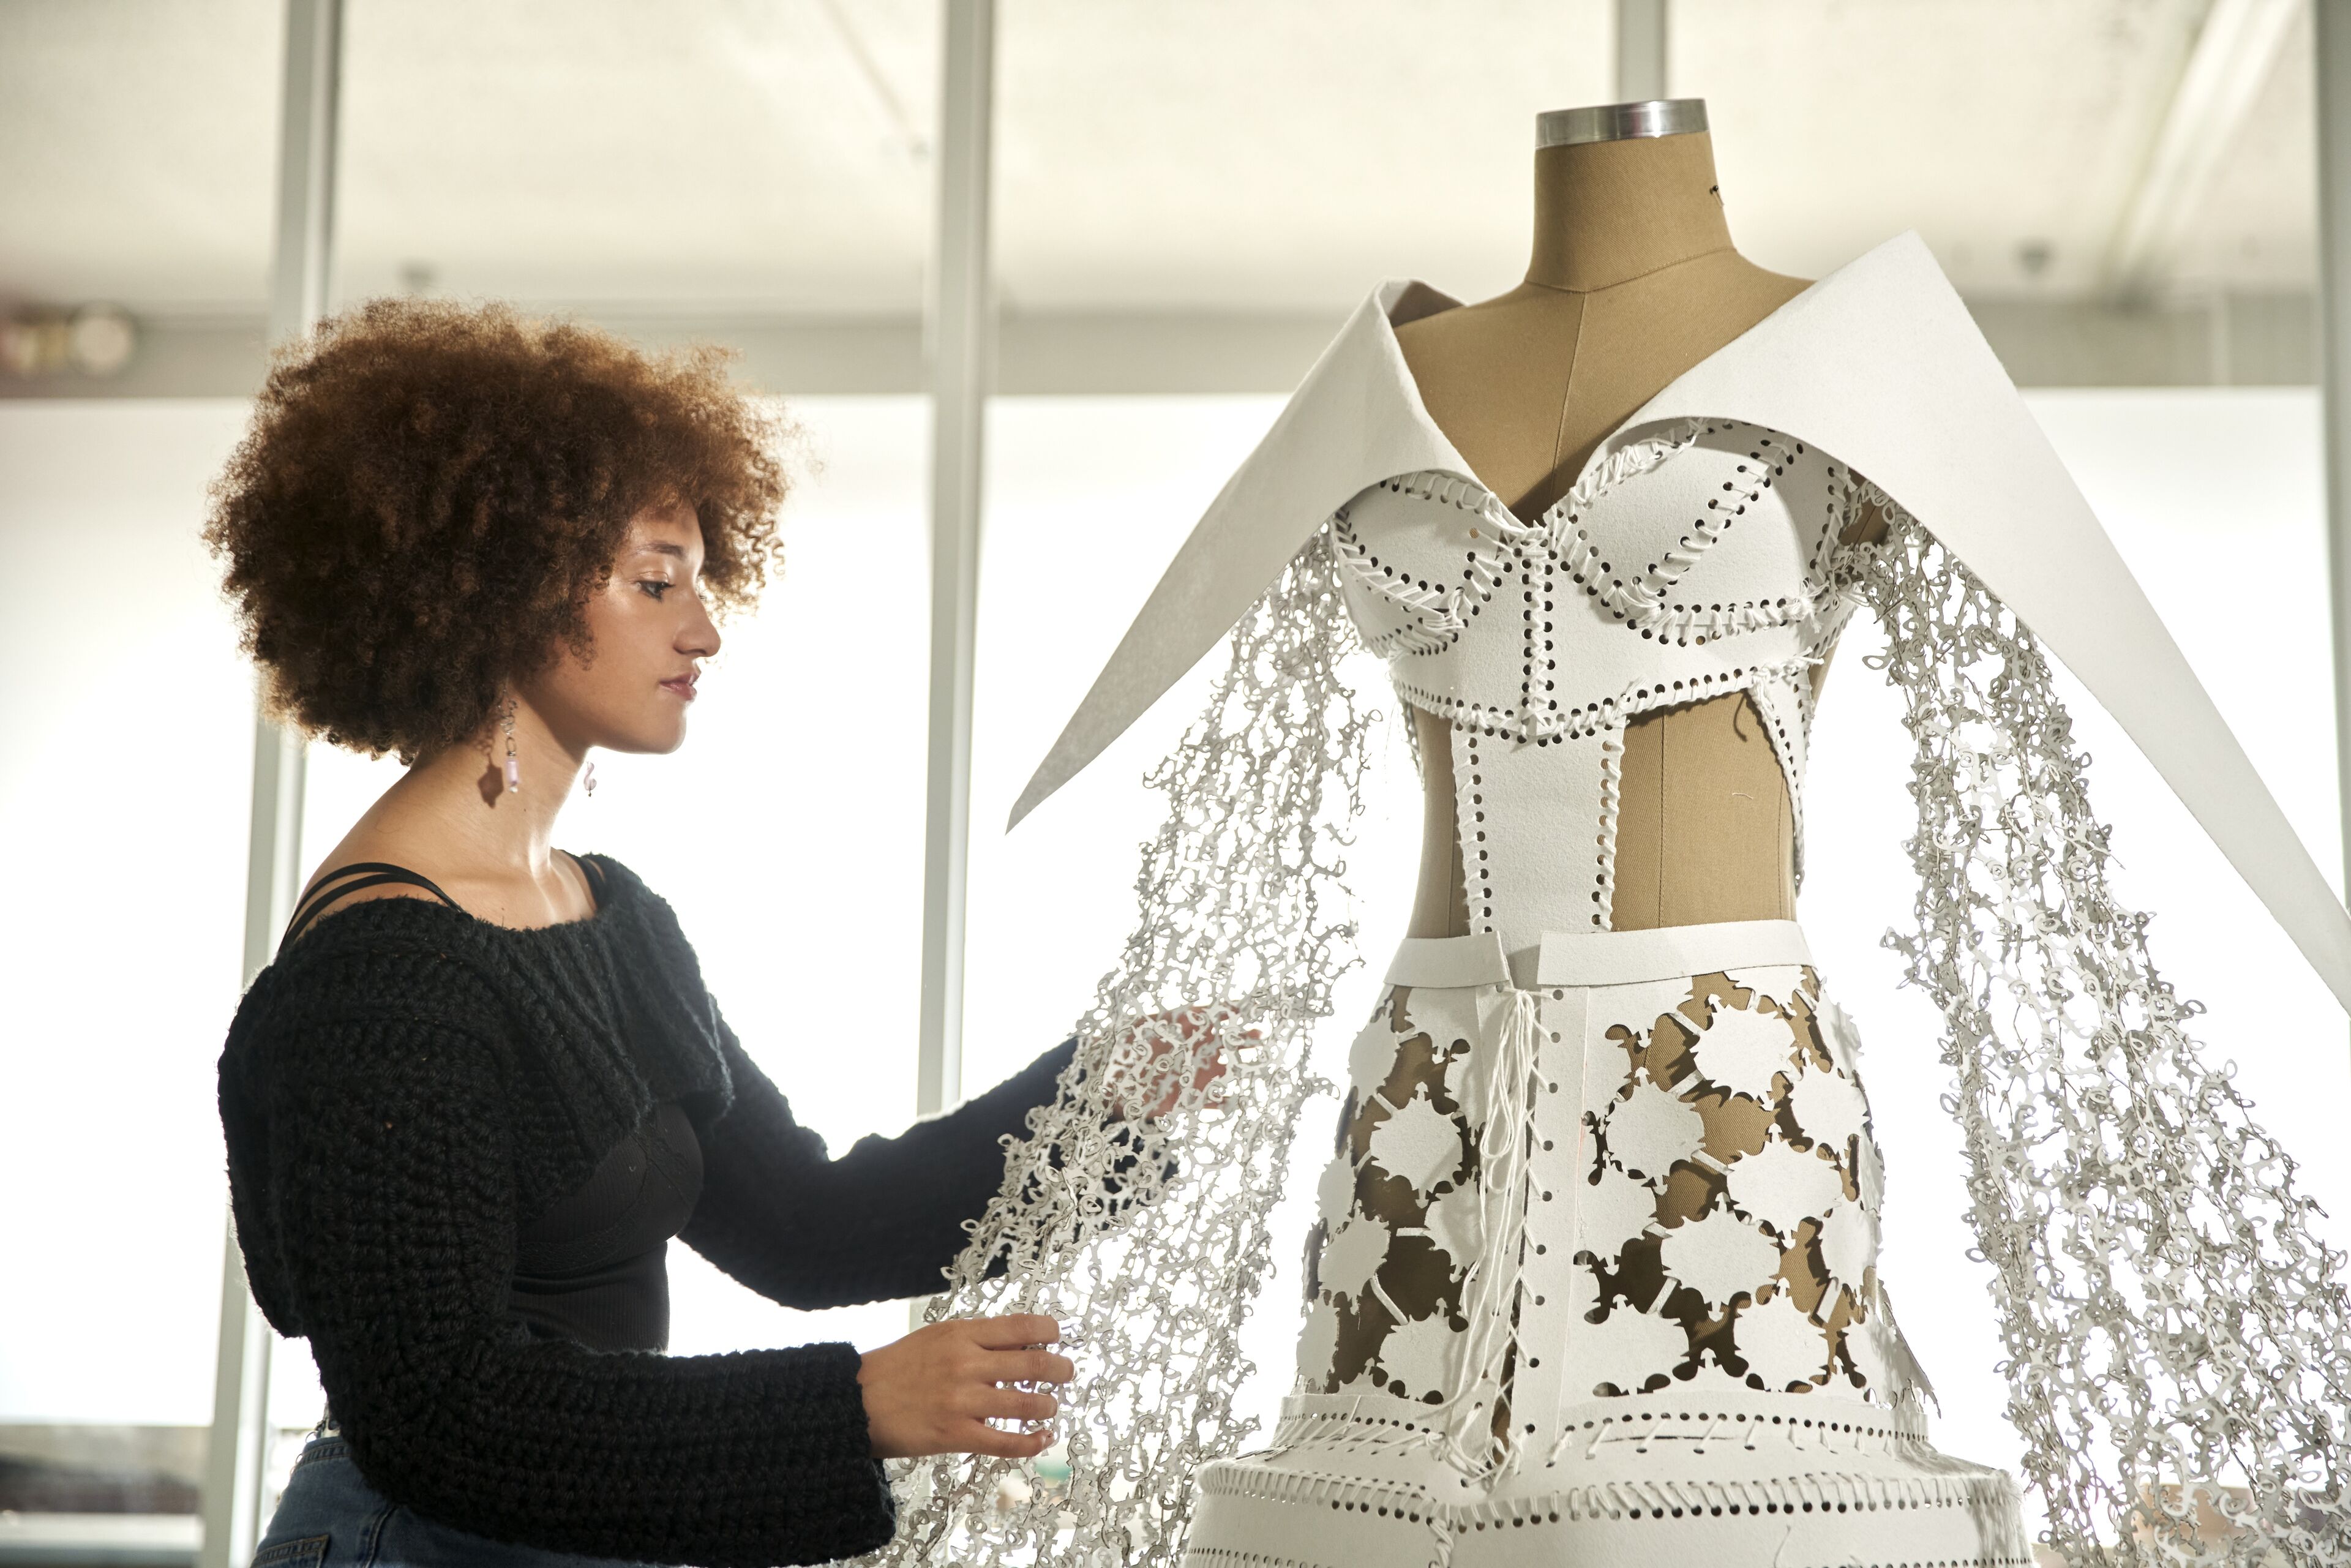 A fashion designer adjusts a lace detail on an avant-garde dress on a mannequin.